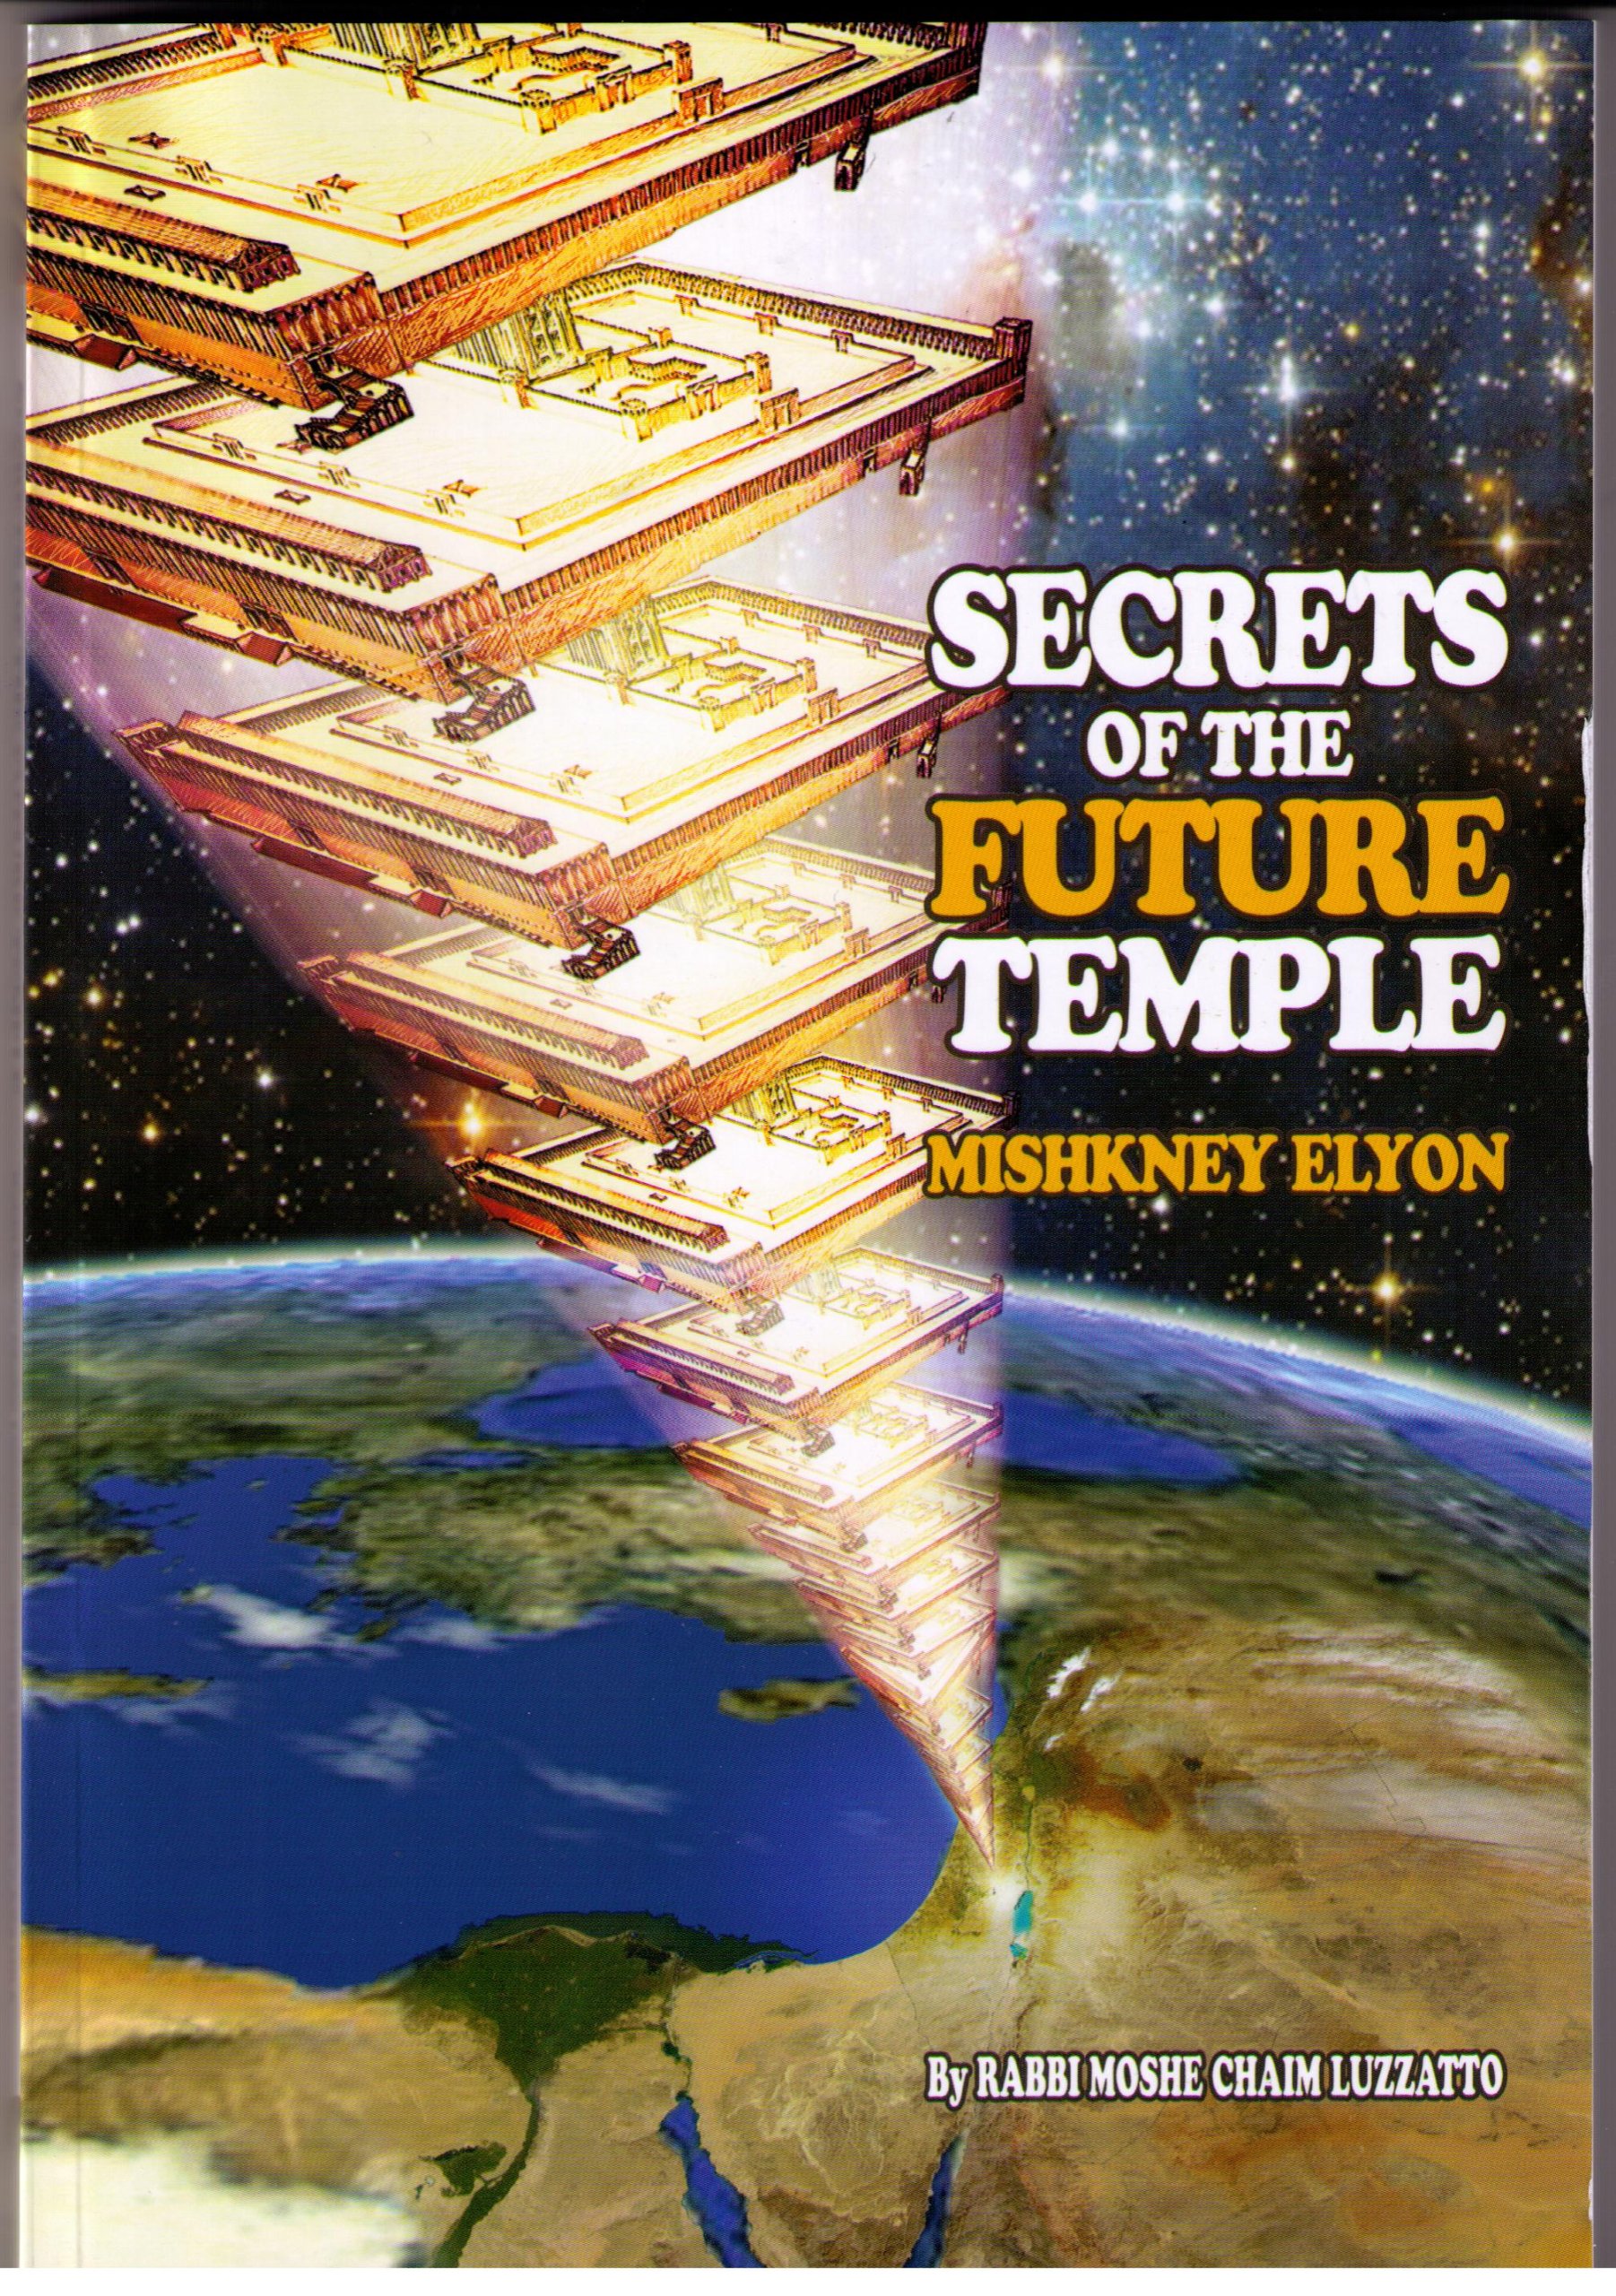 Secrets of the future temple, mishkney Elyon